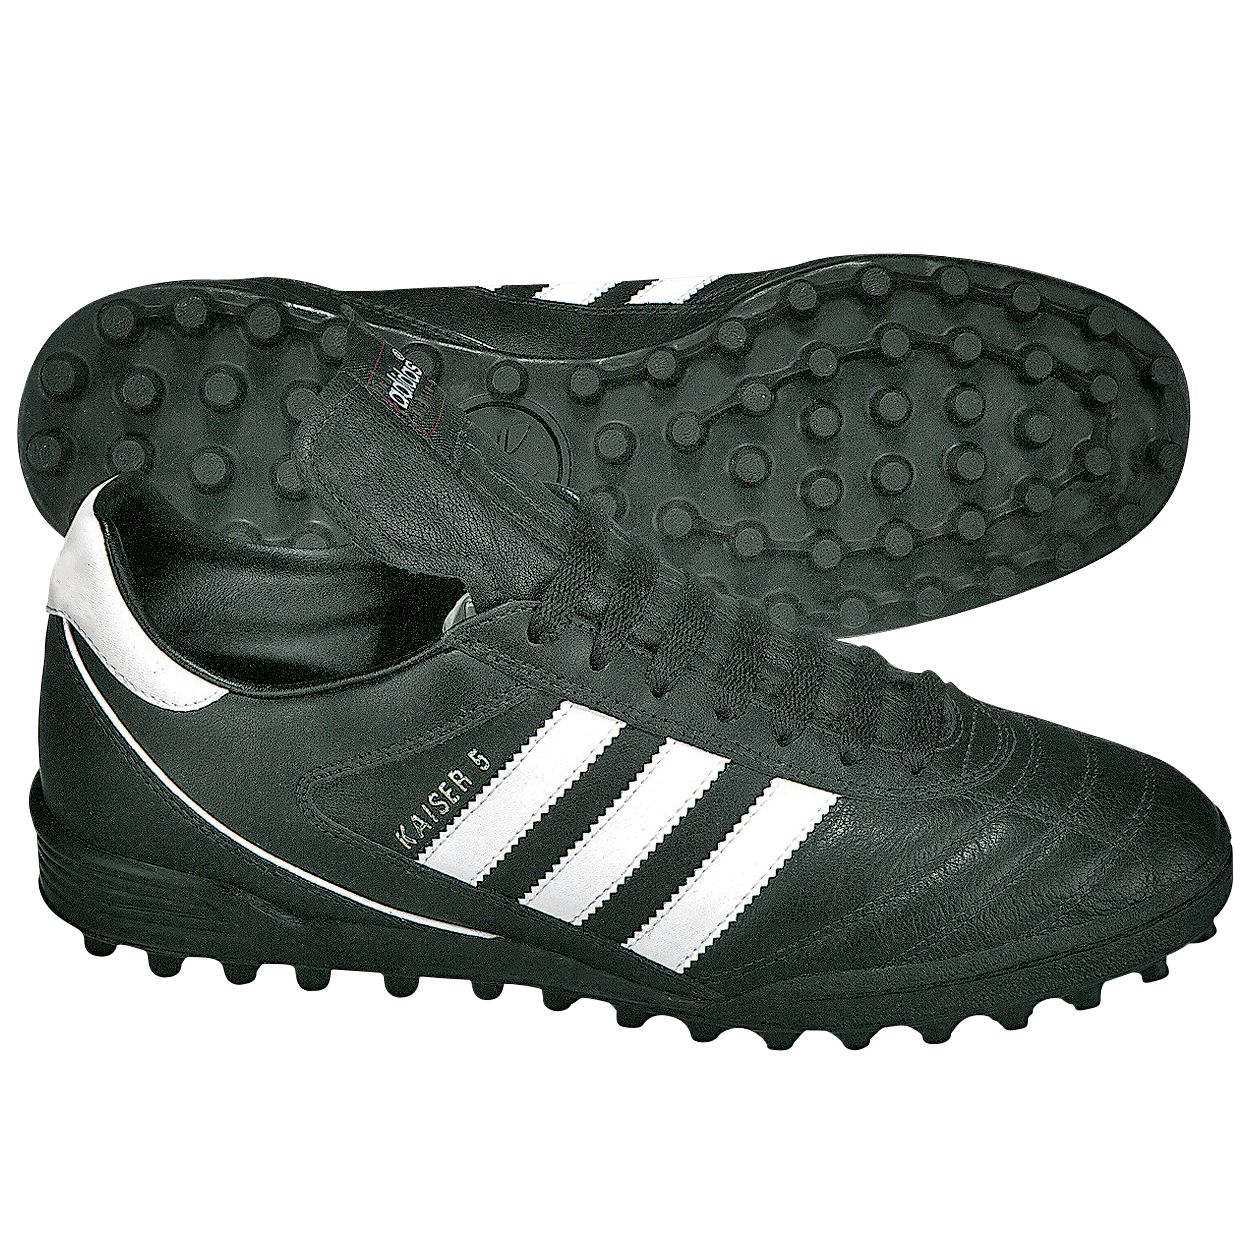 Adidas Kaiser 5 Team Astro Turf Football Boots,